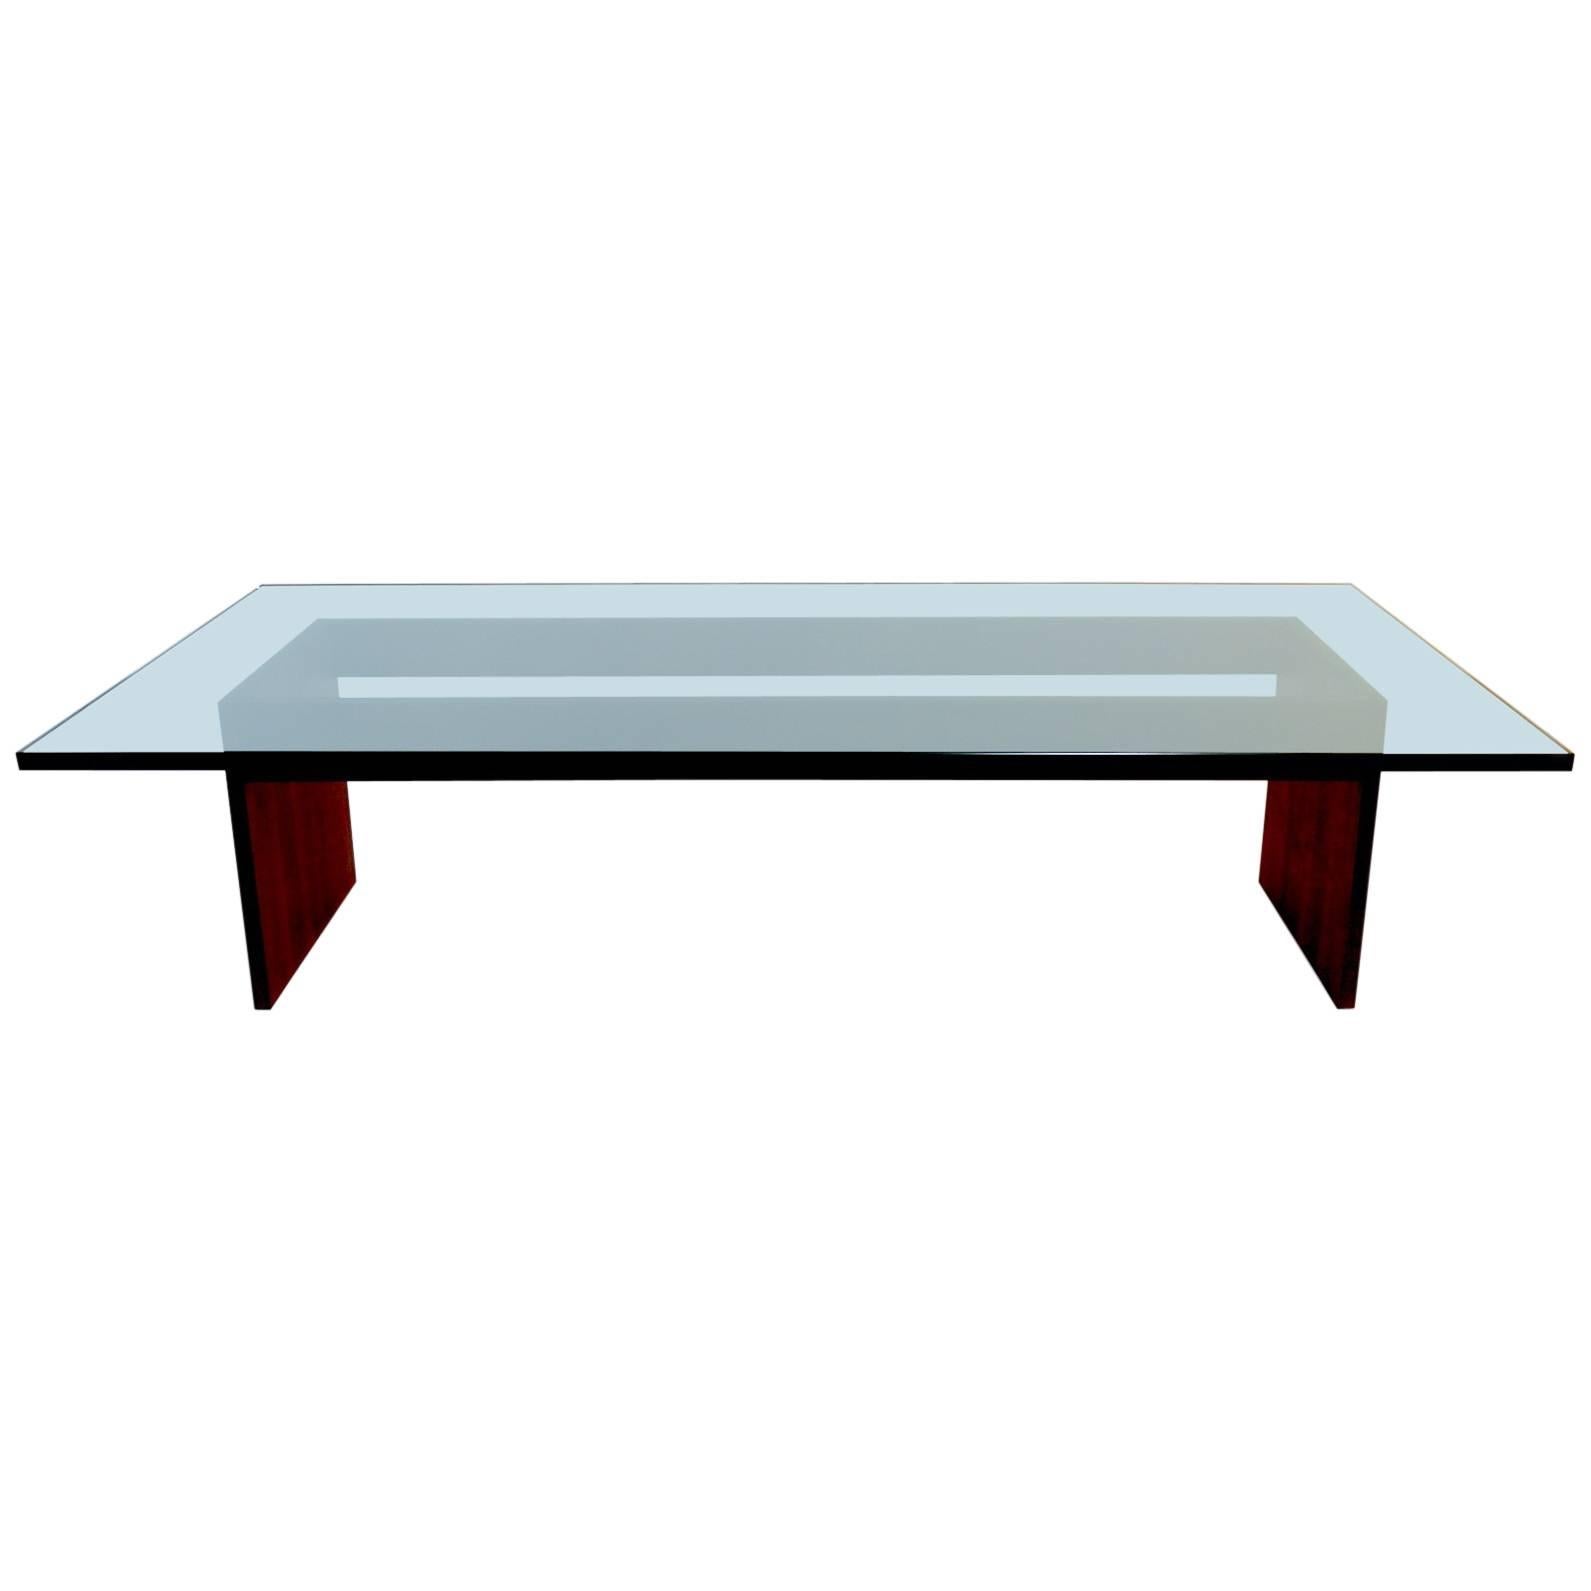 Custom Minimalist Wood and Glass Coffee Table